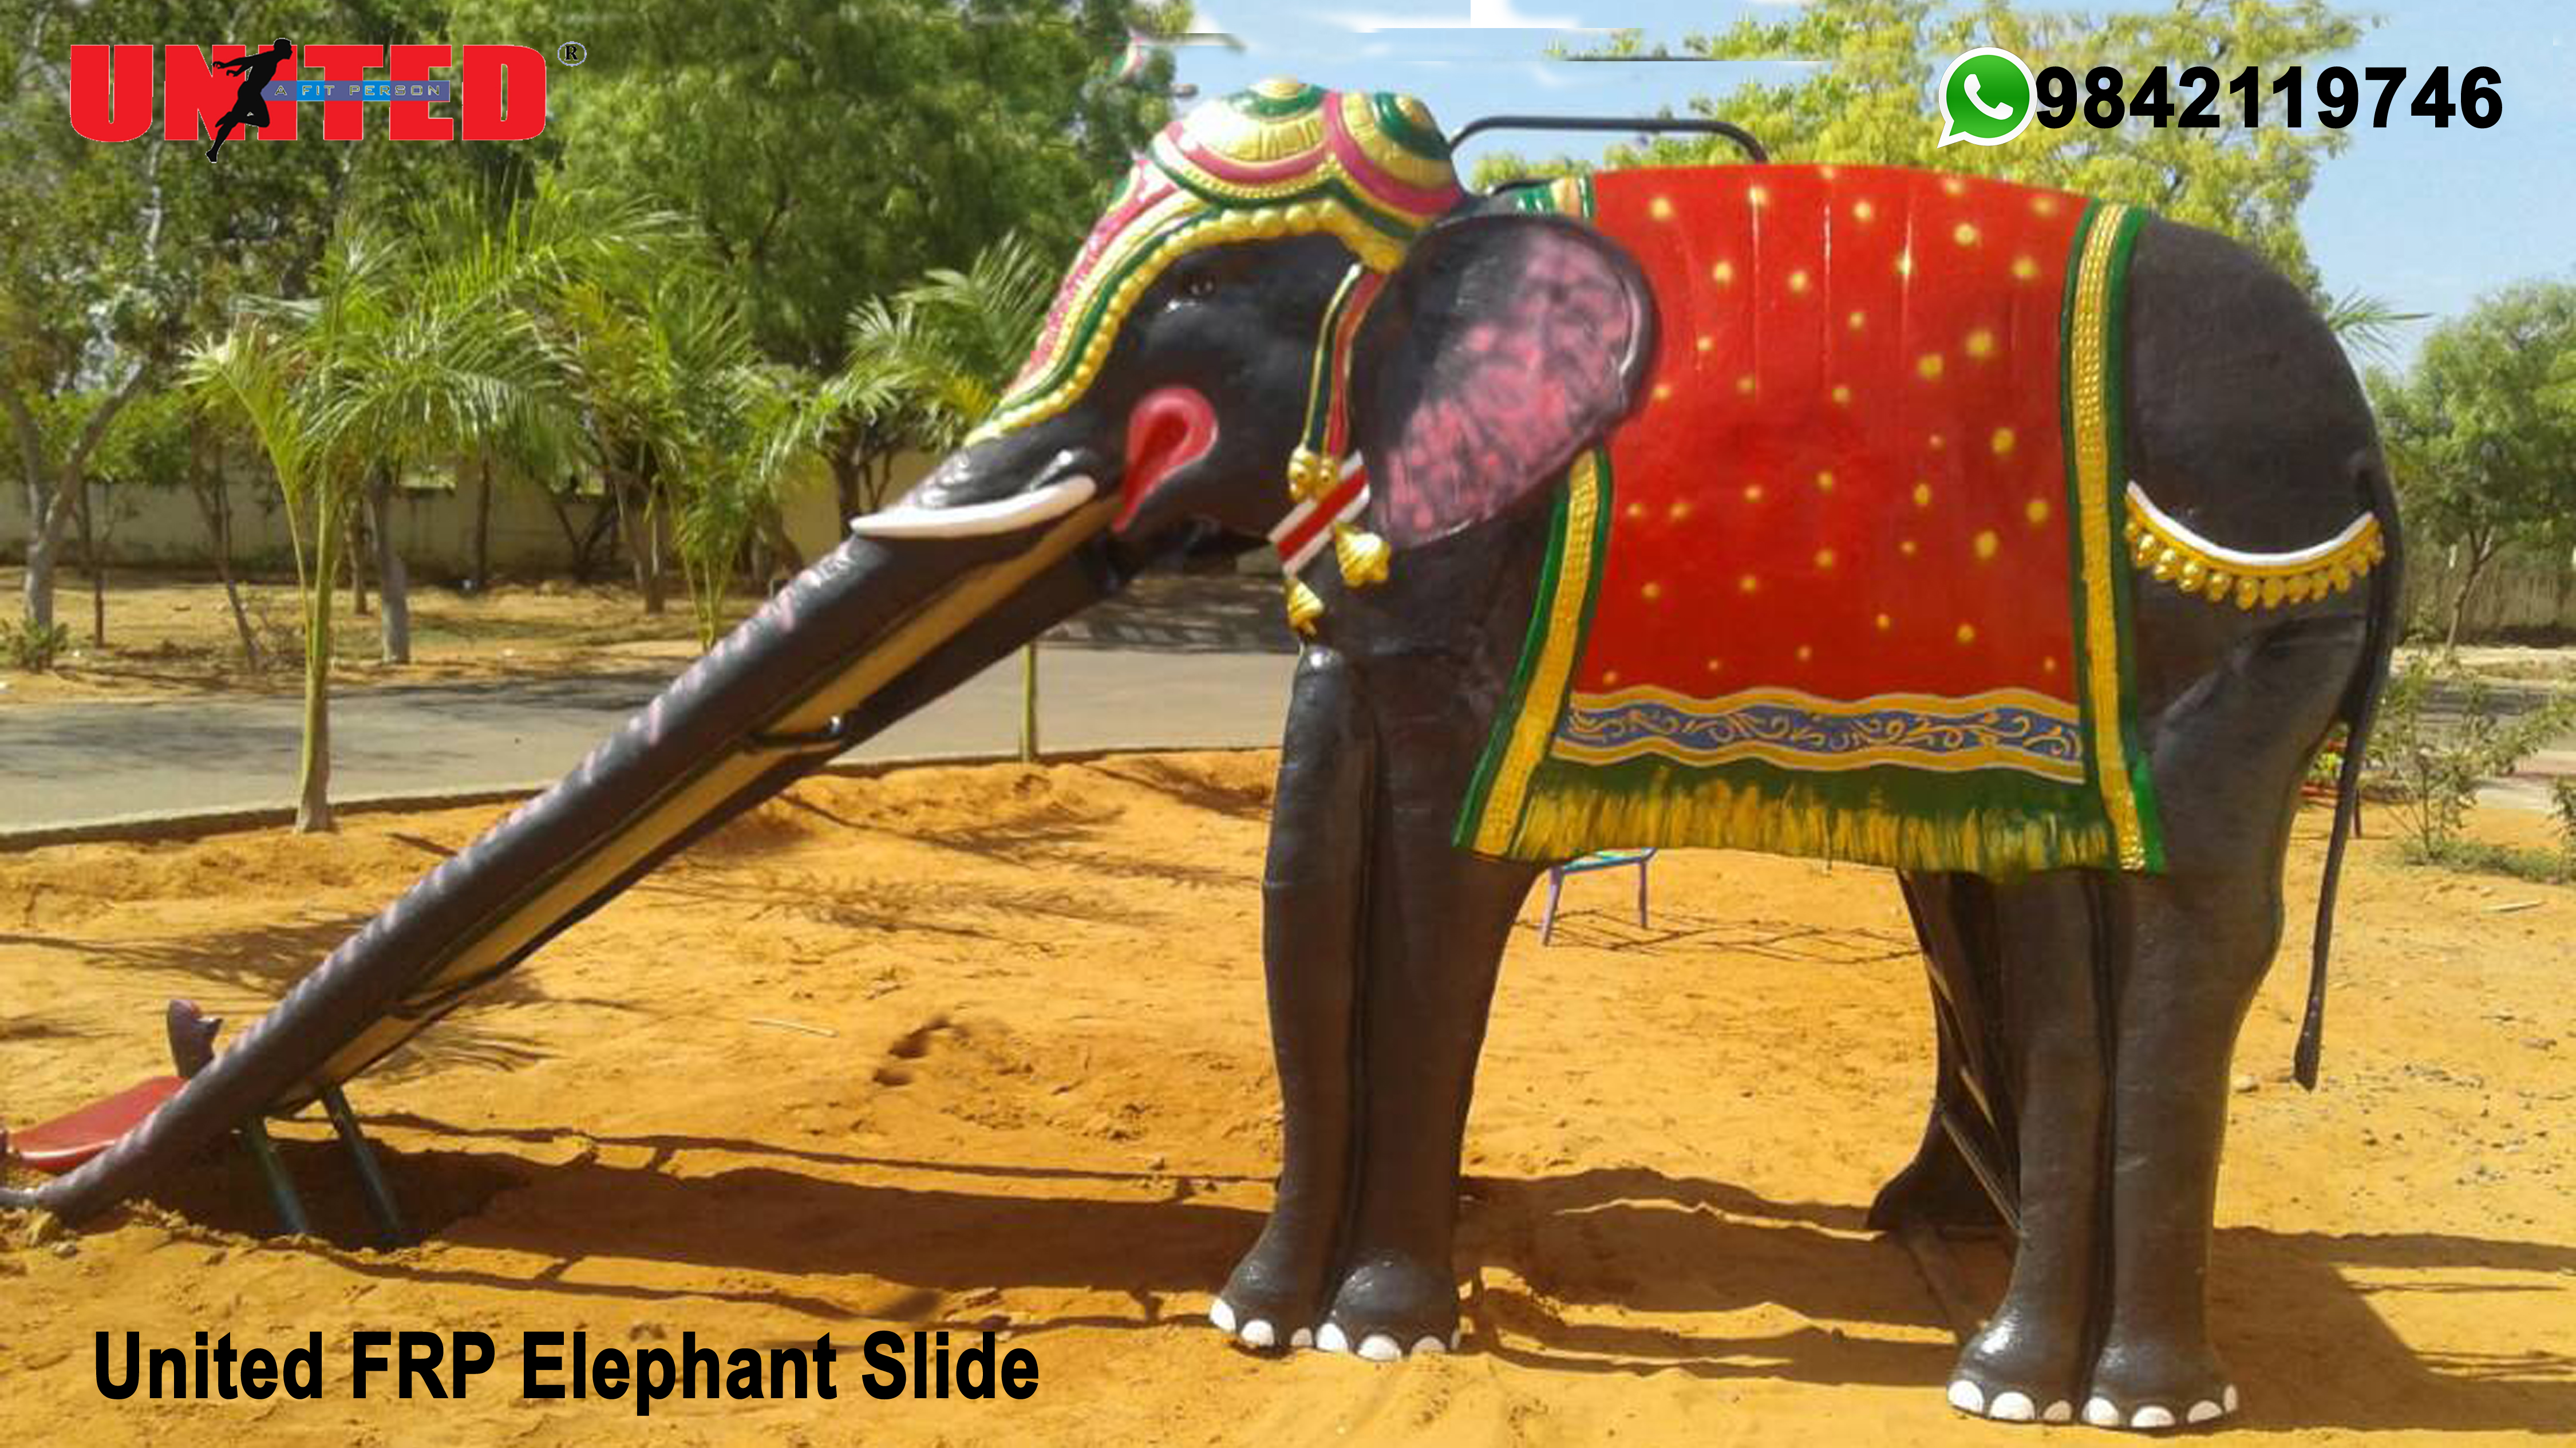 United FRP Elephant Slide